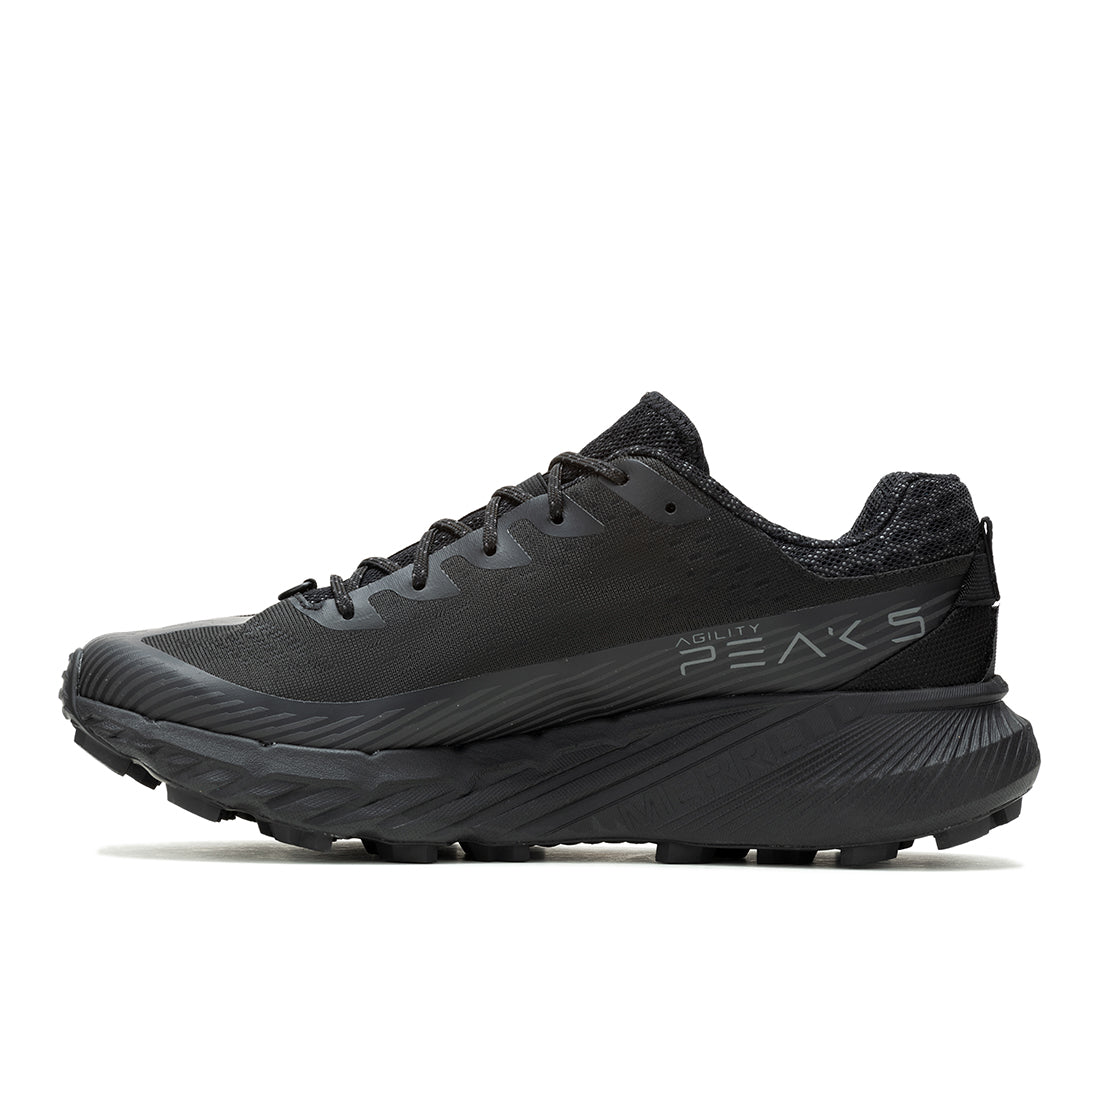 Agility Peak 5 – Black/Black Mens Trail Running Shoes